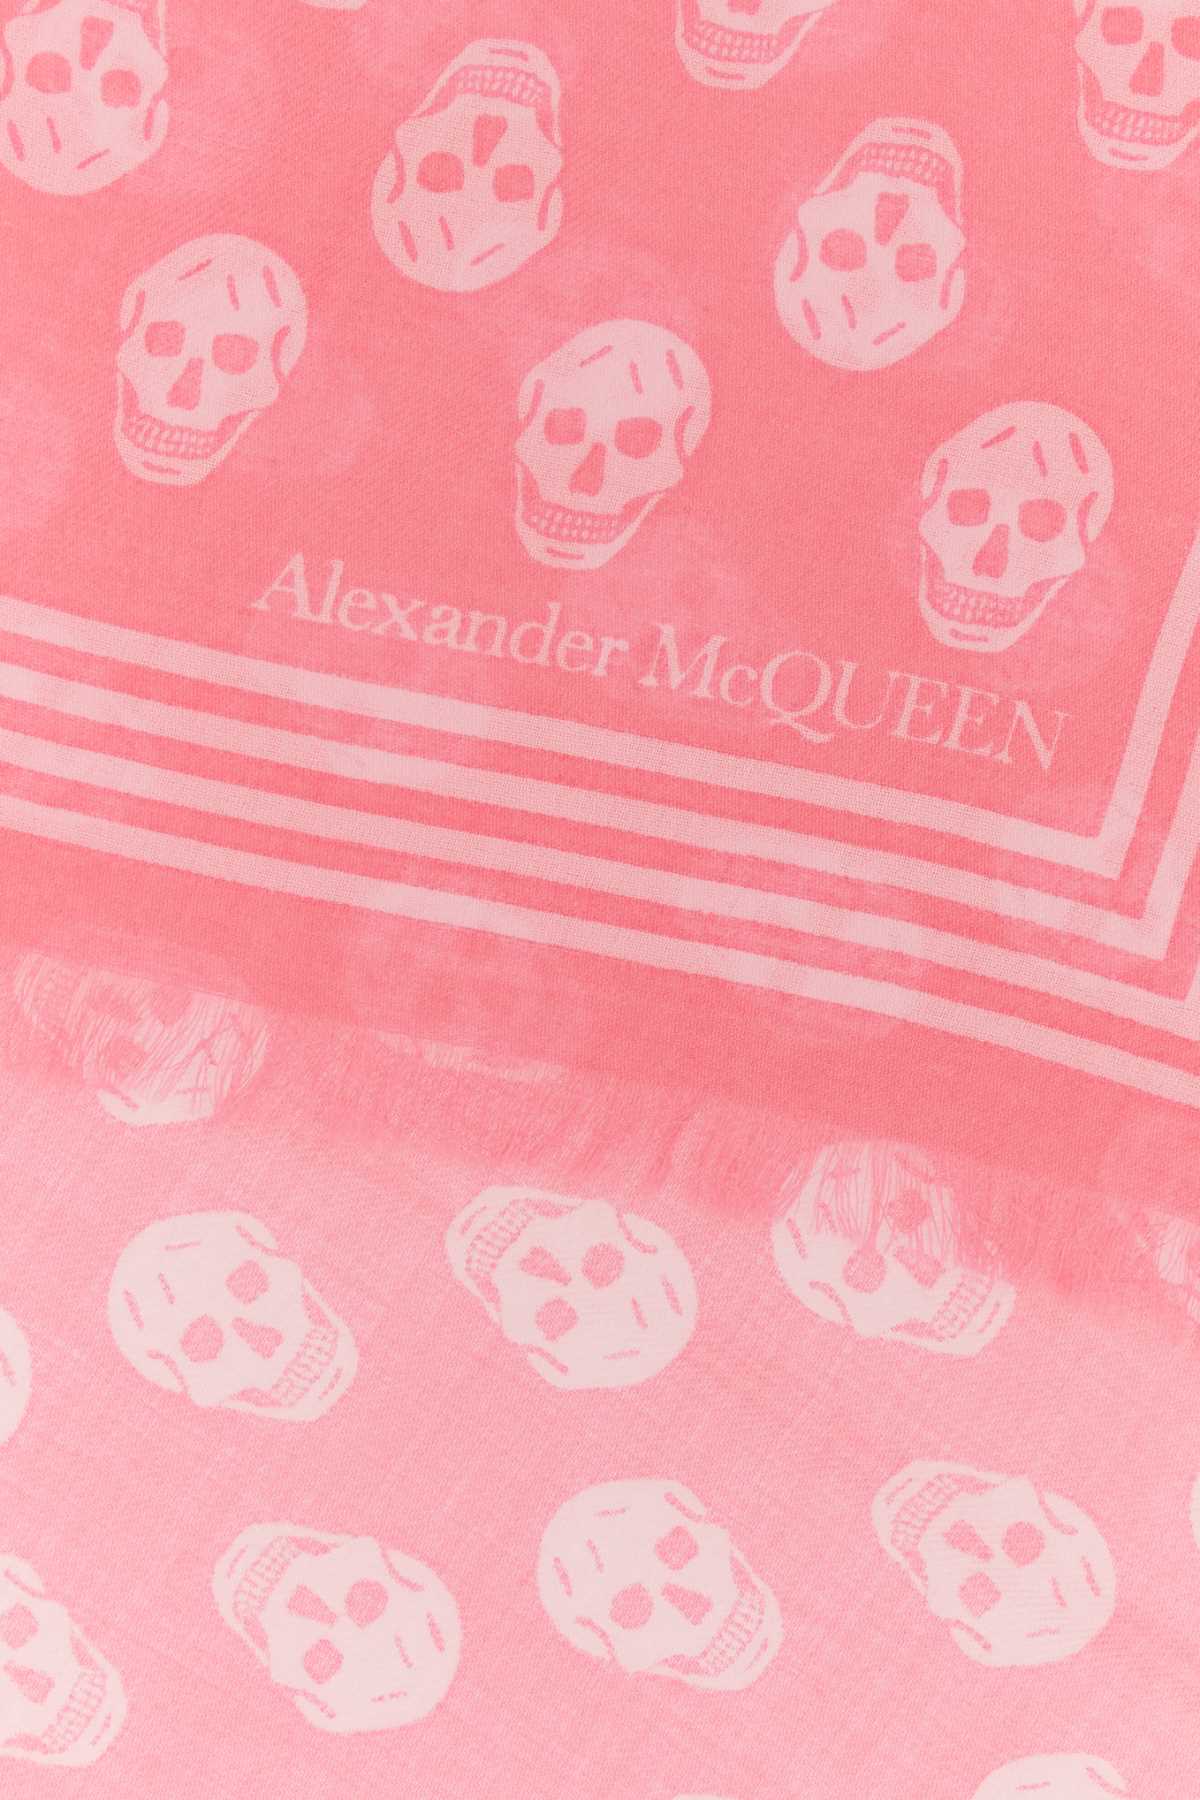 Alexander Mcqueen Printed Wool Scarf In Psycpinkpalepink